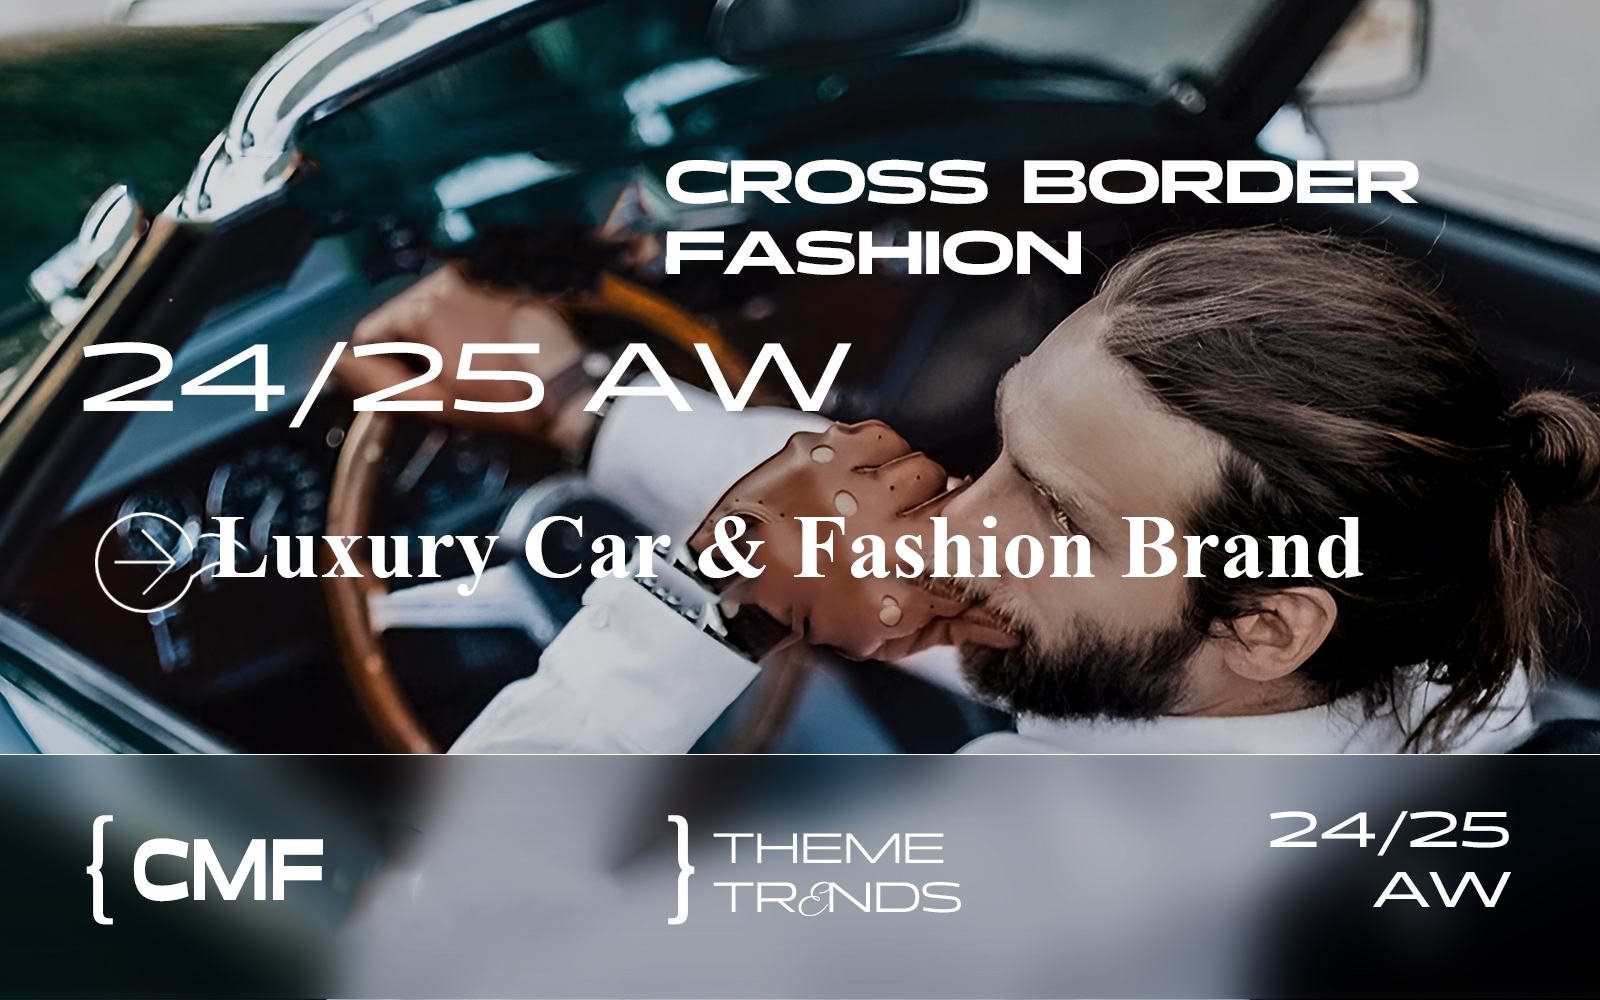 Cross Border Fashion -- The A/W 24/25 Trend for Luxury Car & Fashion Design